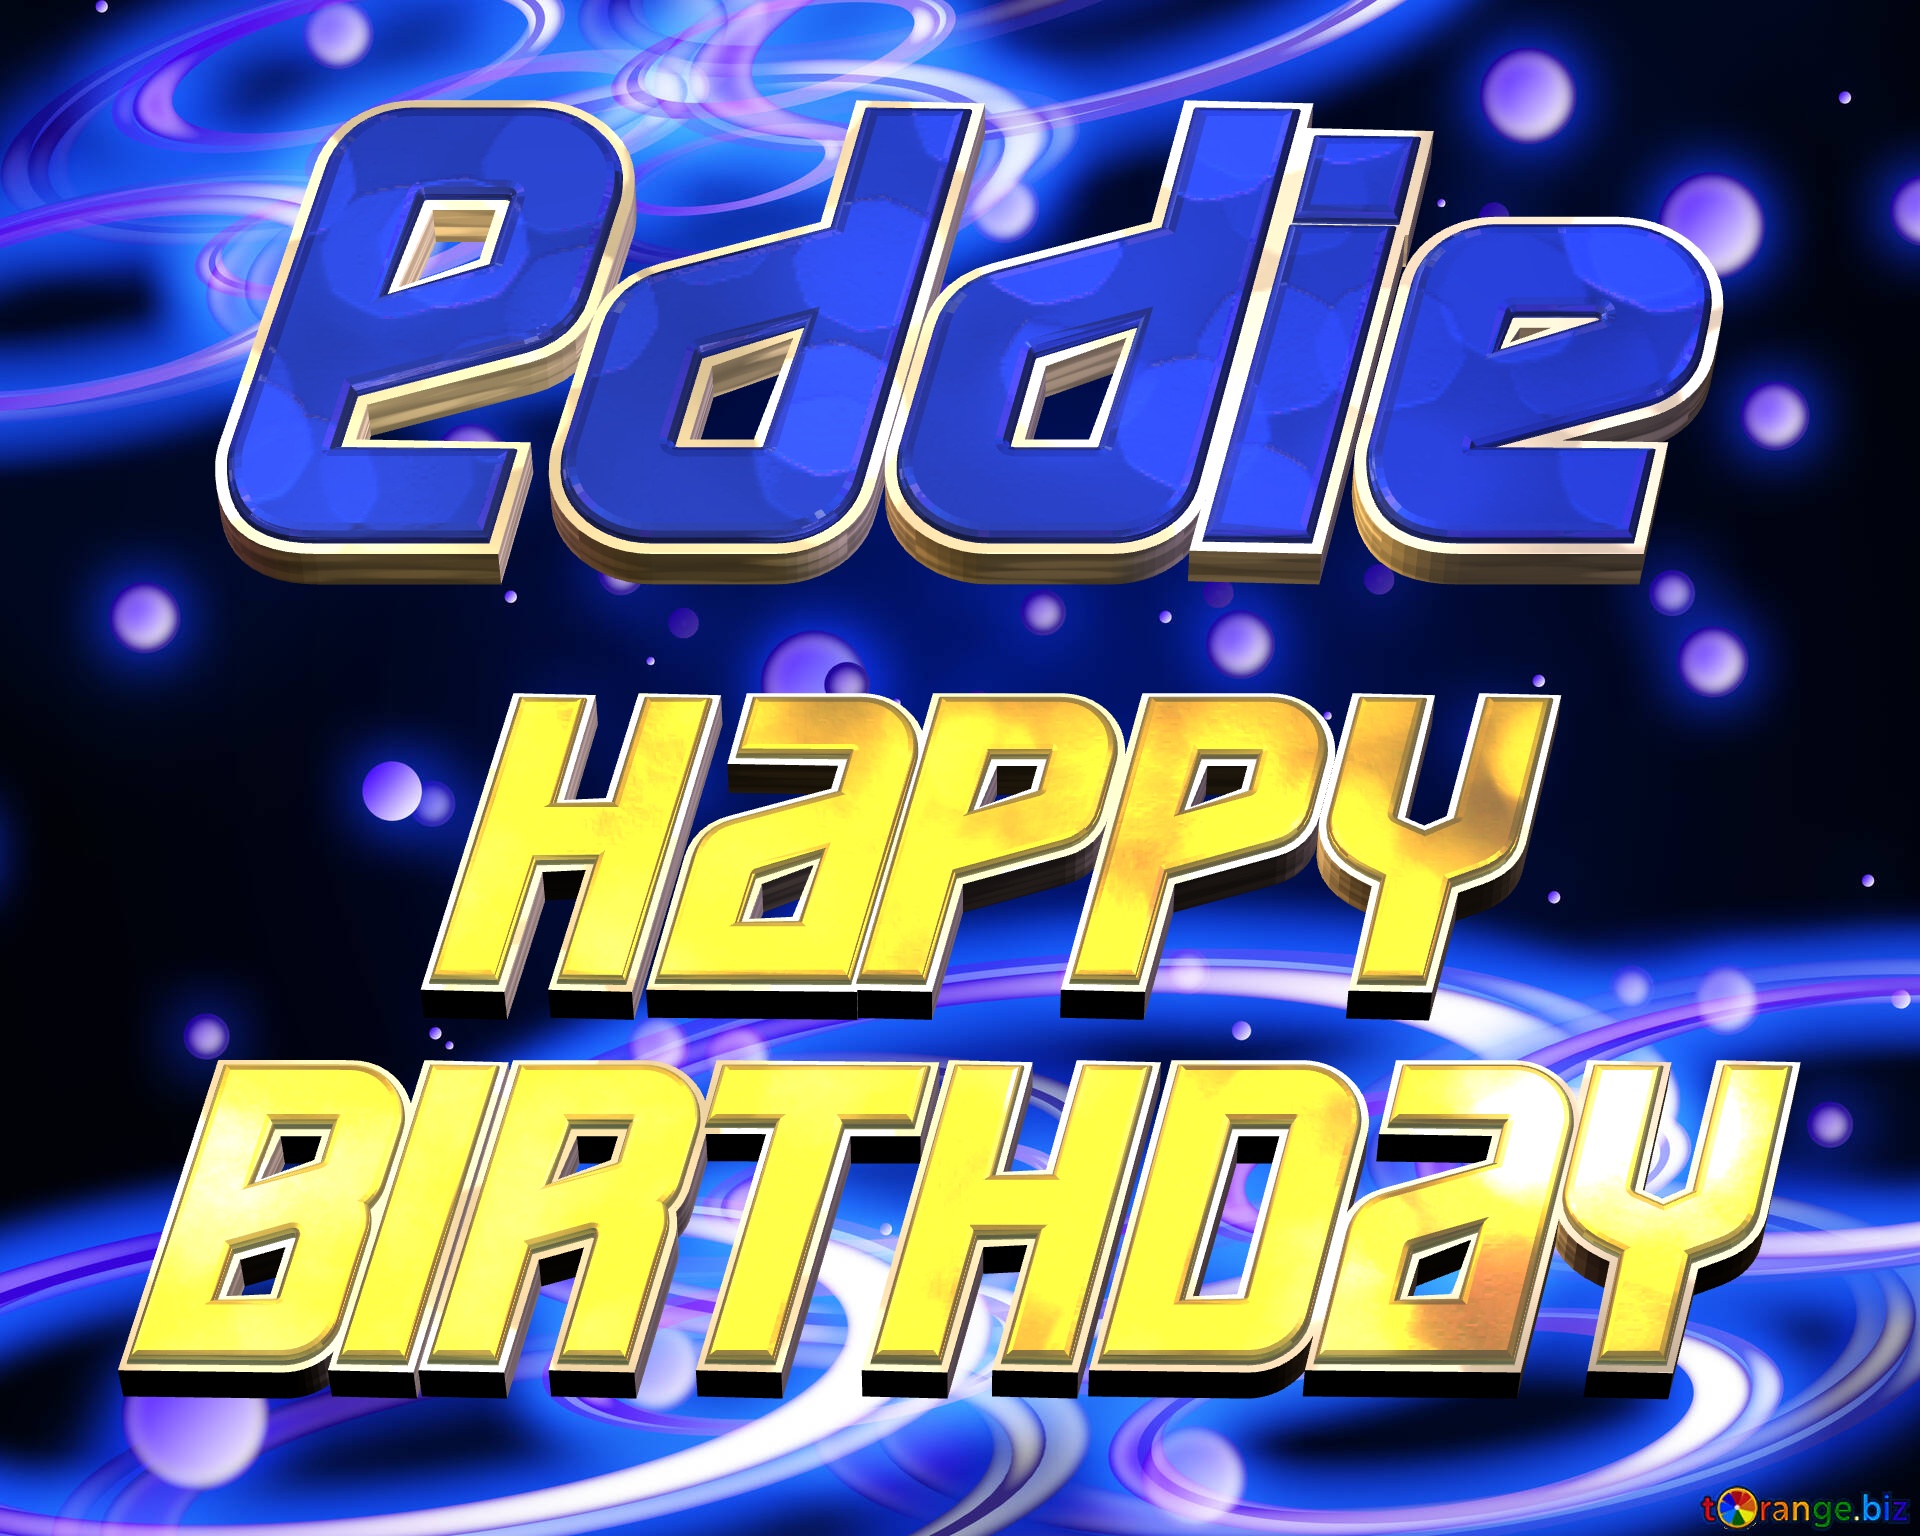 Eddie Space Happy Birthday! Technology background №54919